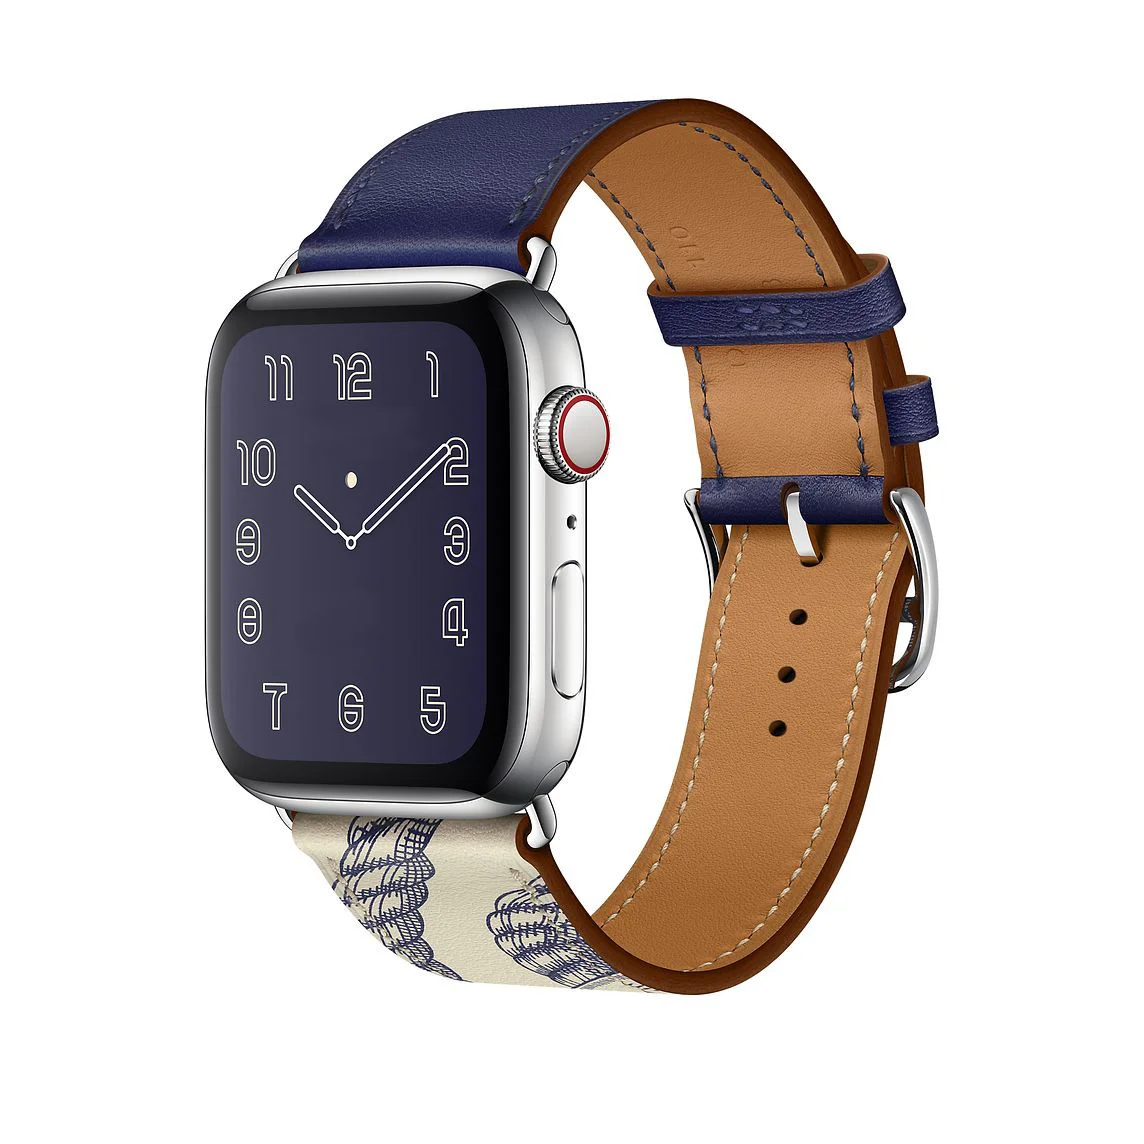 Řemínek iMore Single Tour Apple Watch Series 3/2/1 (42mm) - Inkoust/Beton